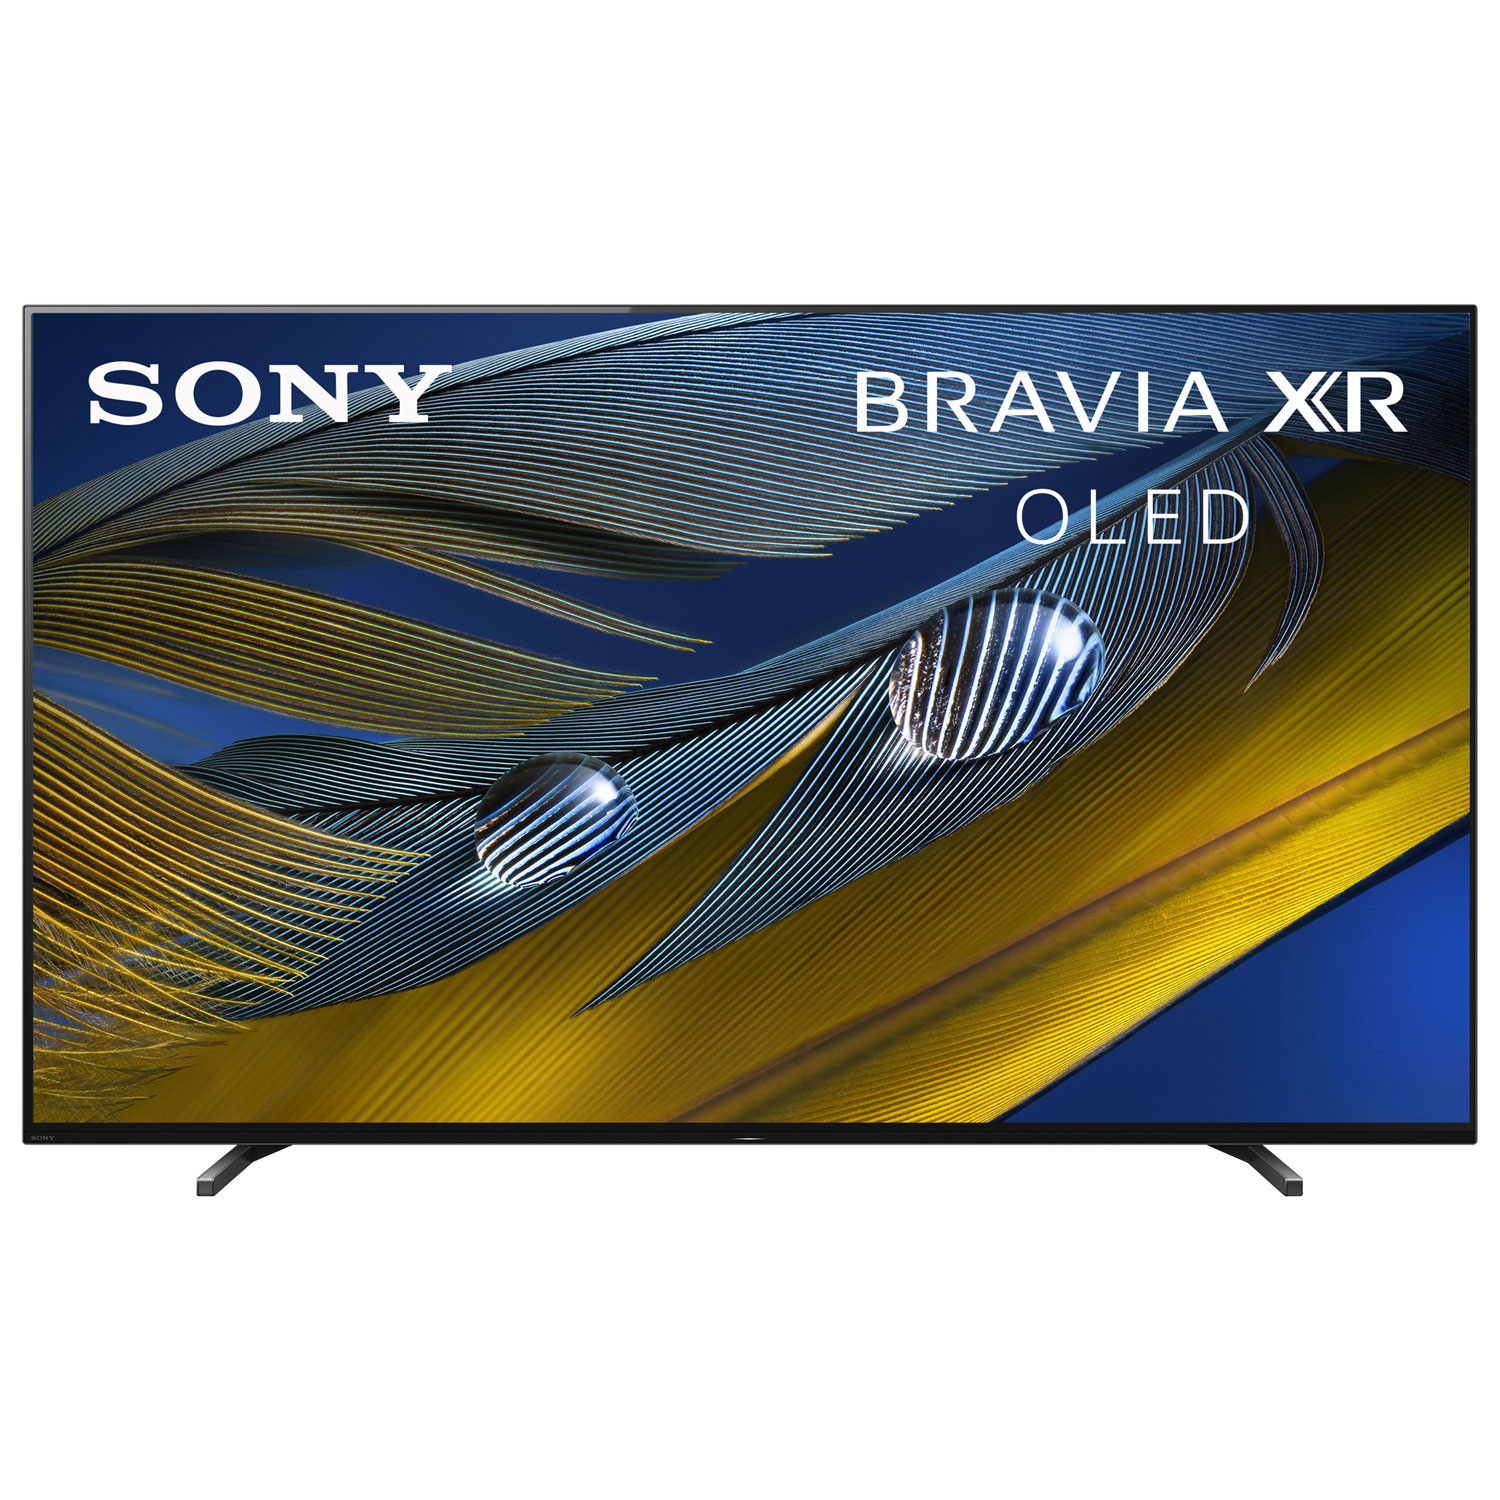 Sony BRAVIA XR A80J 65" 4K UHD HDR OLED Smart Google TV (XR65A80J) - 2021